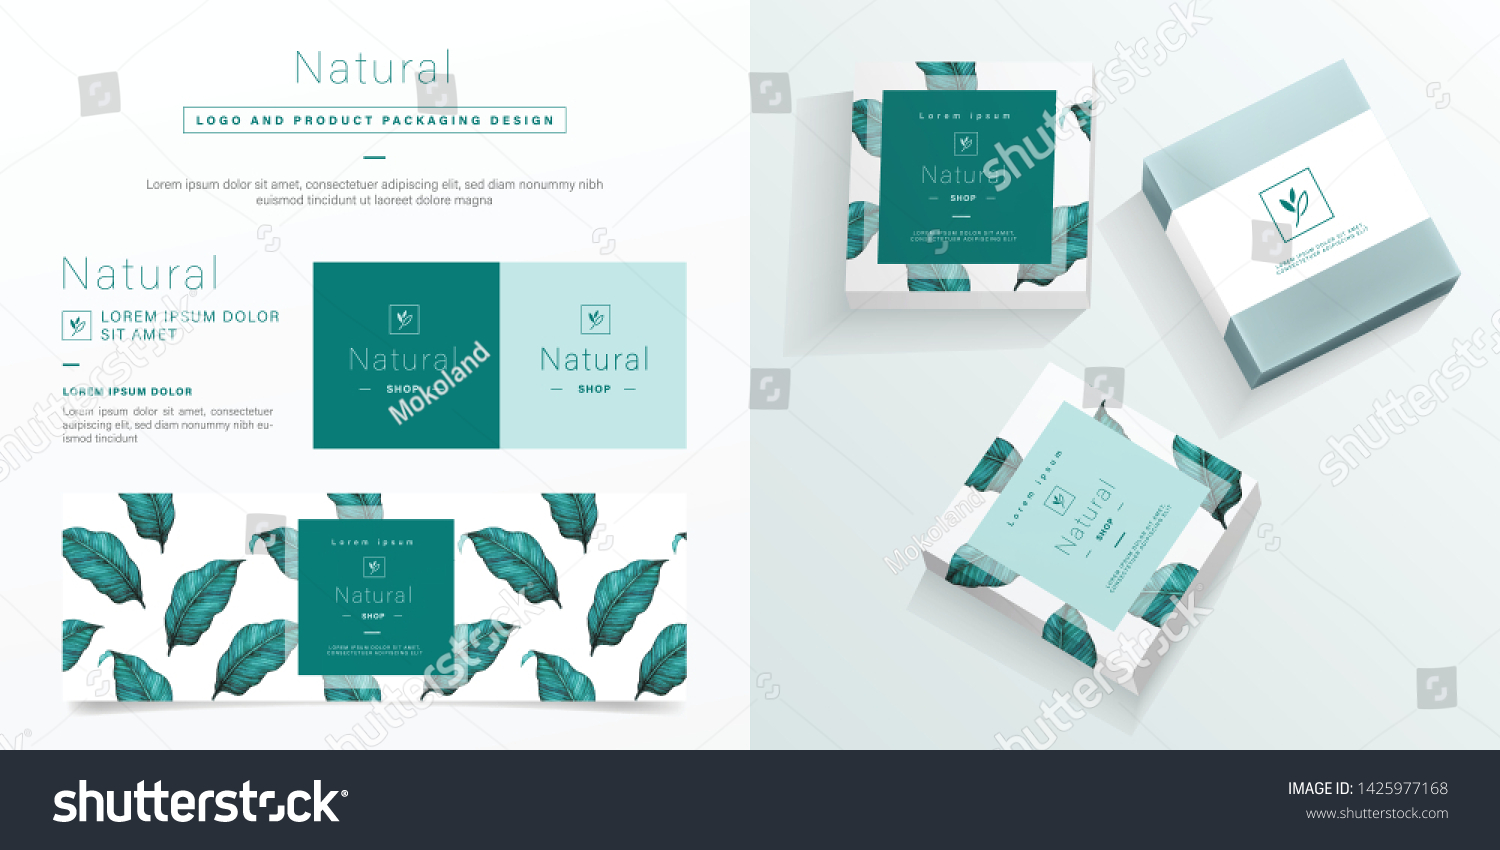 Download Natural Logo Packaging Design Template Natural Stock Vector Royalty Free 1425977168